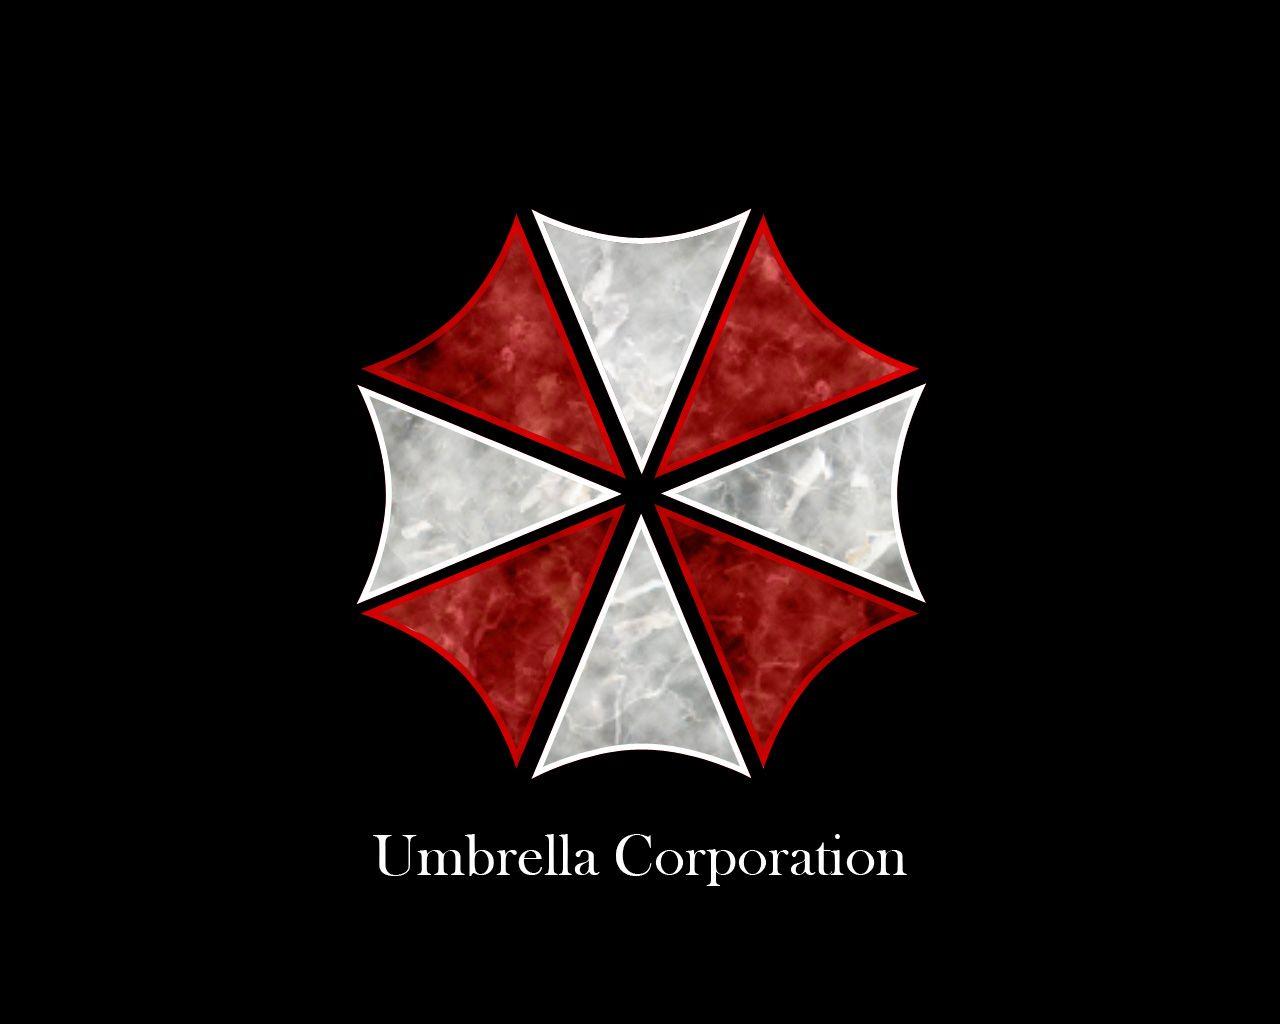 Umbrella Company Logo - Umbrella Corporation logo | Photoshop Tutorials @ Designstacks